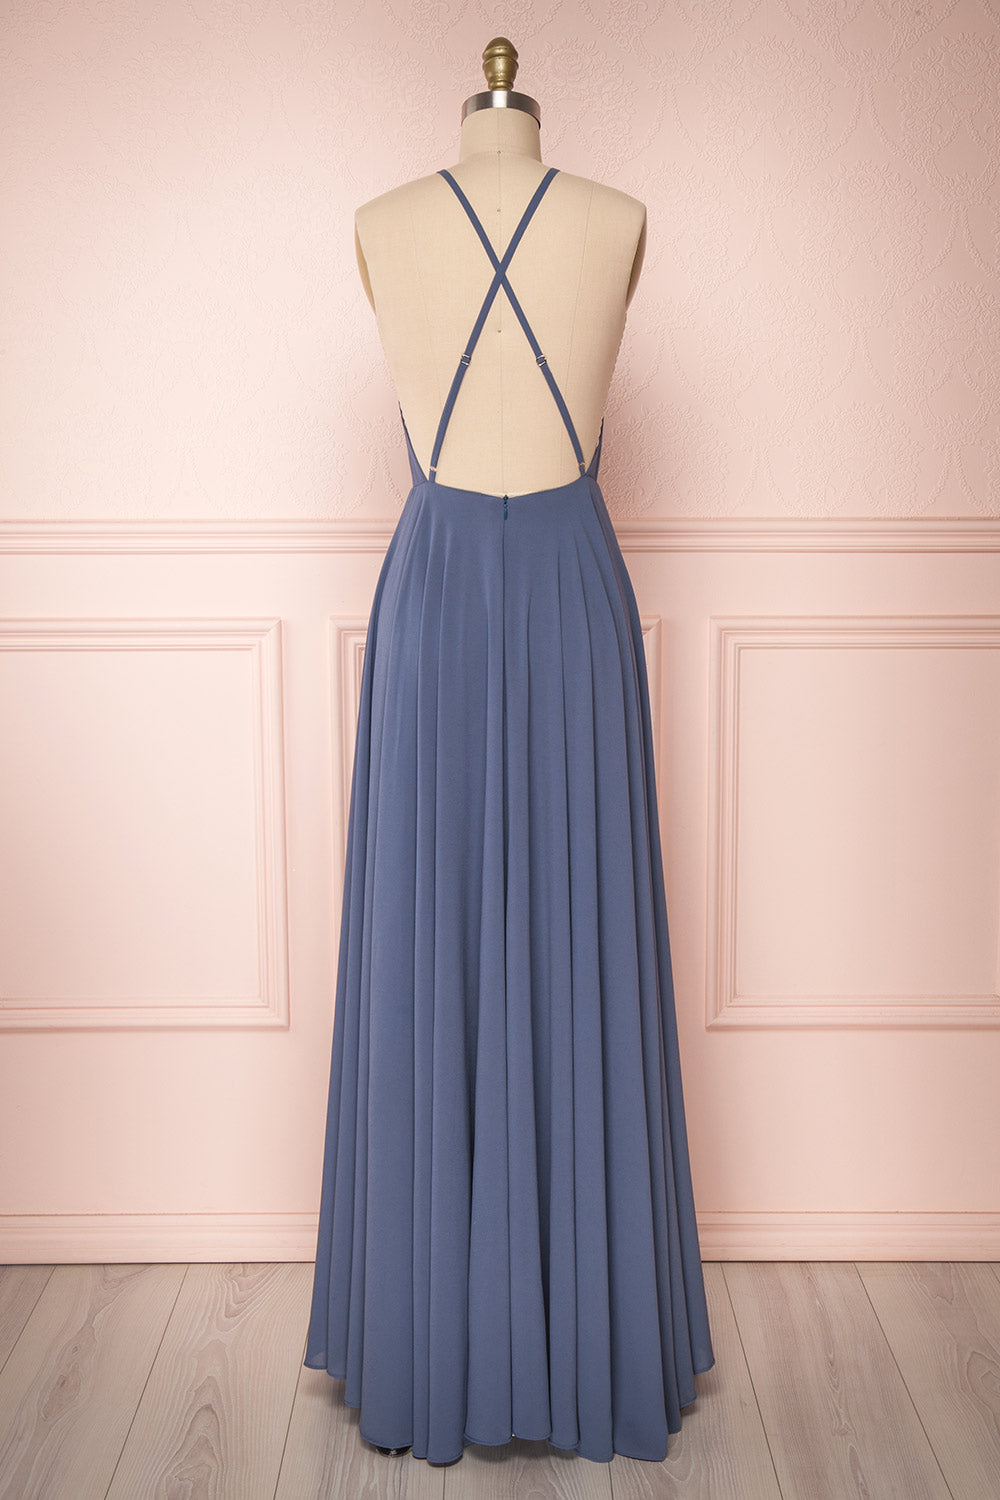 Shaynez Blue | Empire Prom Dress